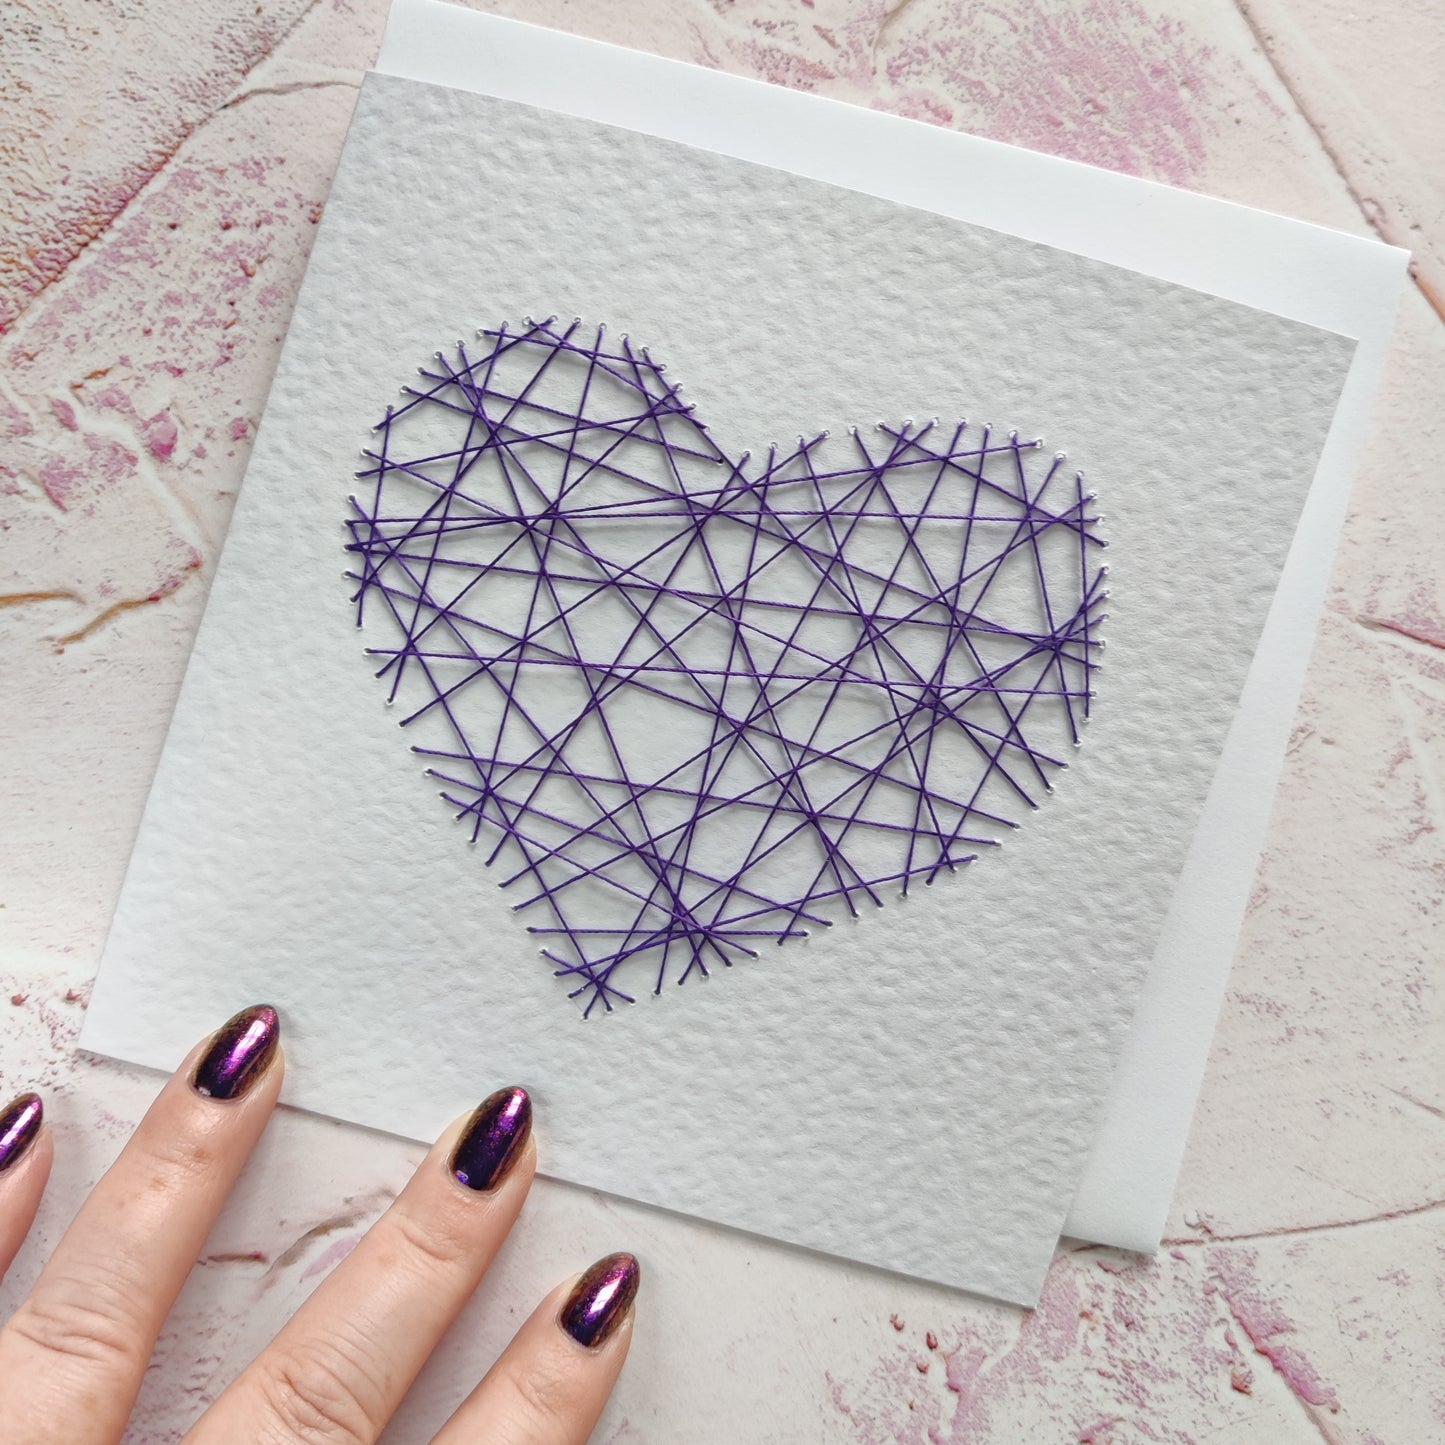 Handmade Red Threaded Heart Greeting Card